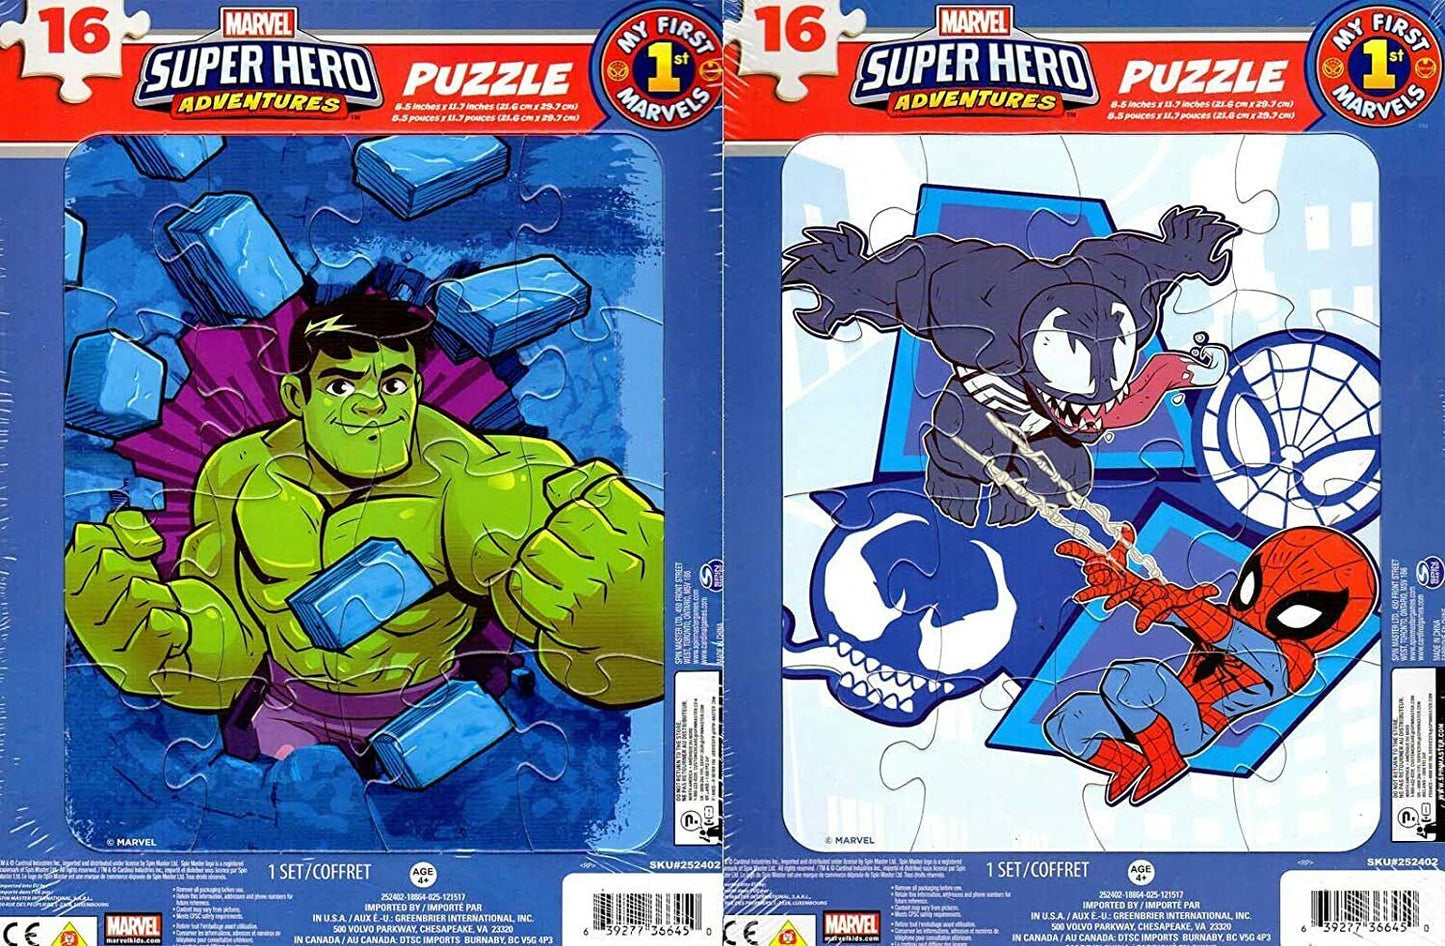 Marvel Super Hero Adventures - 16 Pieces Jigsaw Puzzle - (Set of 2 Puzzles) v5